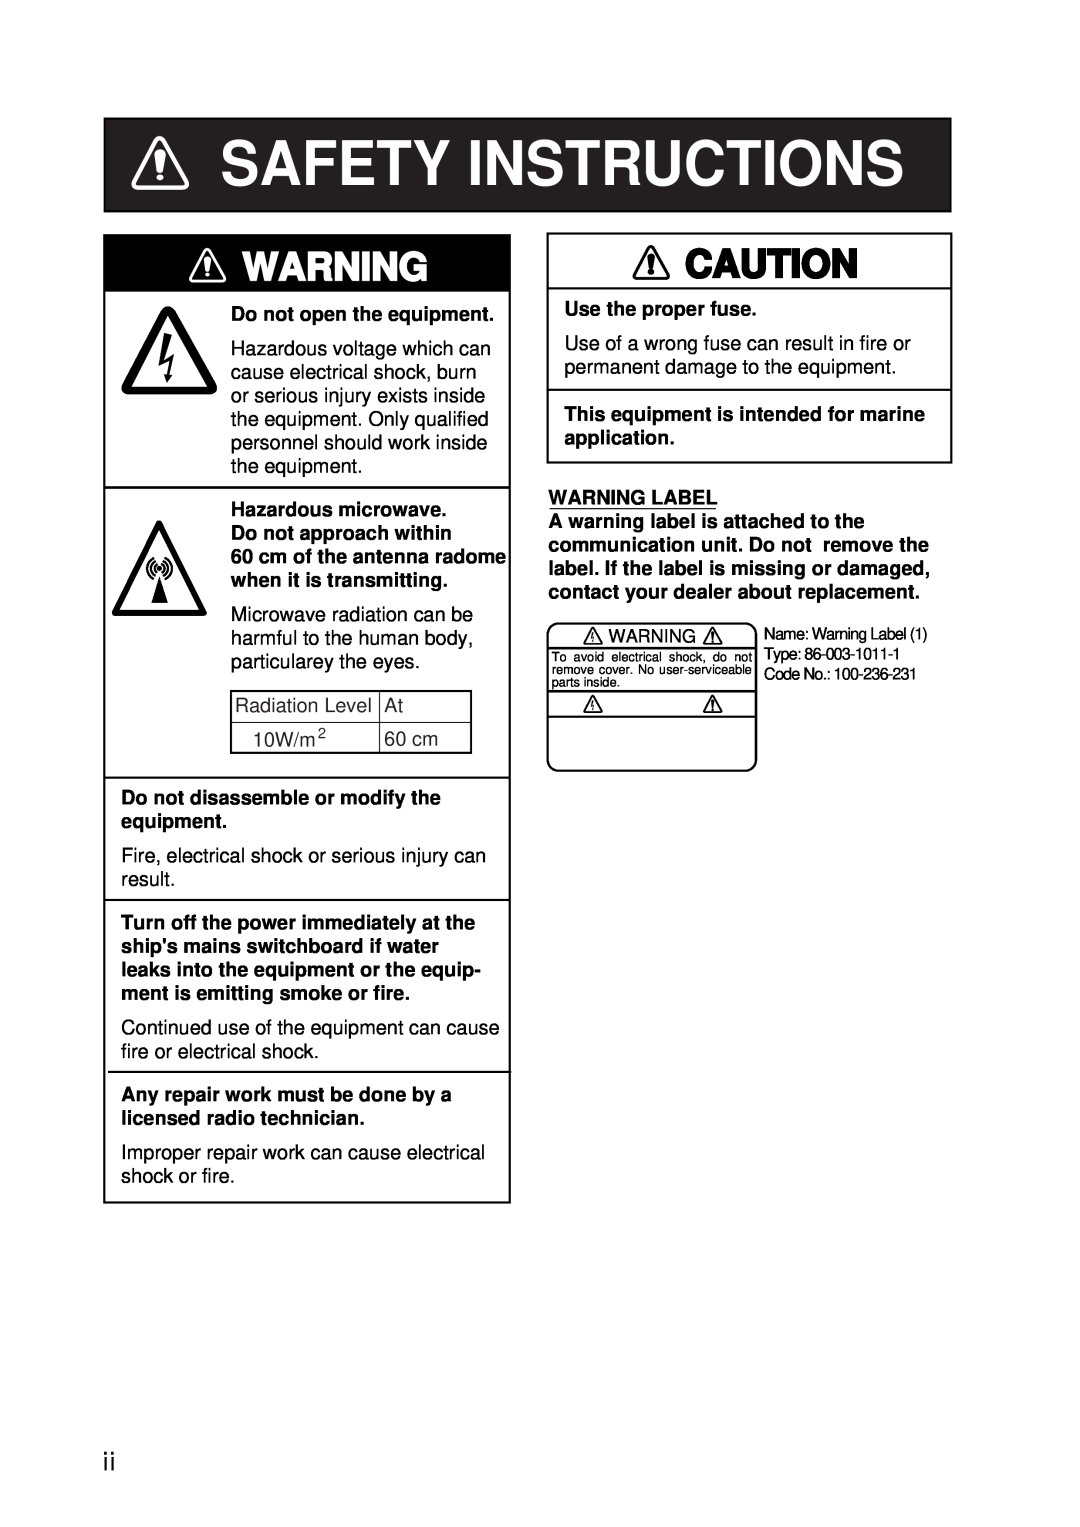 Furuno 16 manual Safety Instructions, Radiation Level, 10W/m, 60 cm 